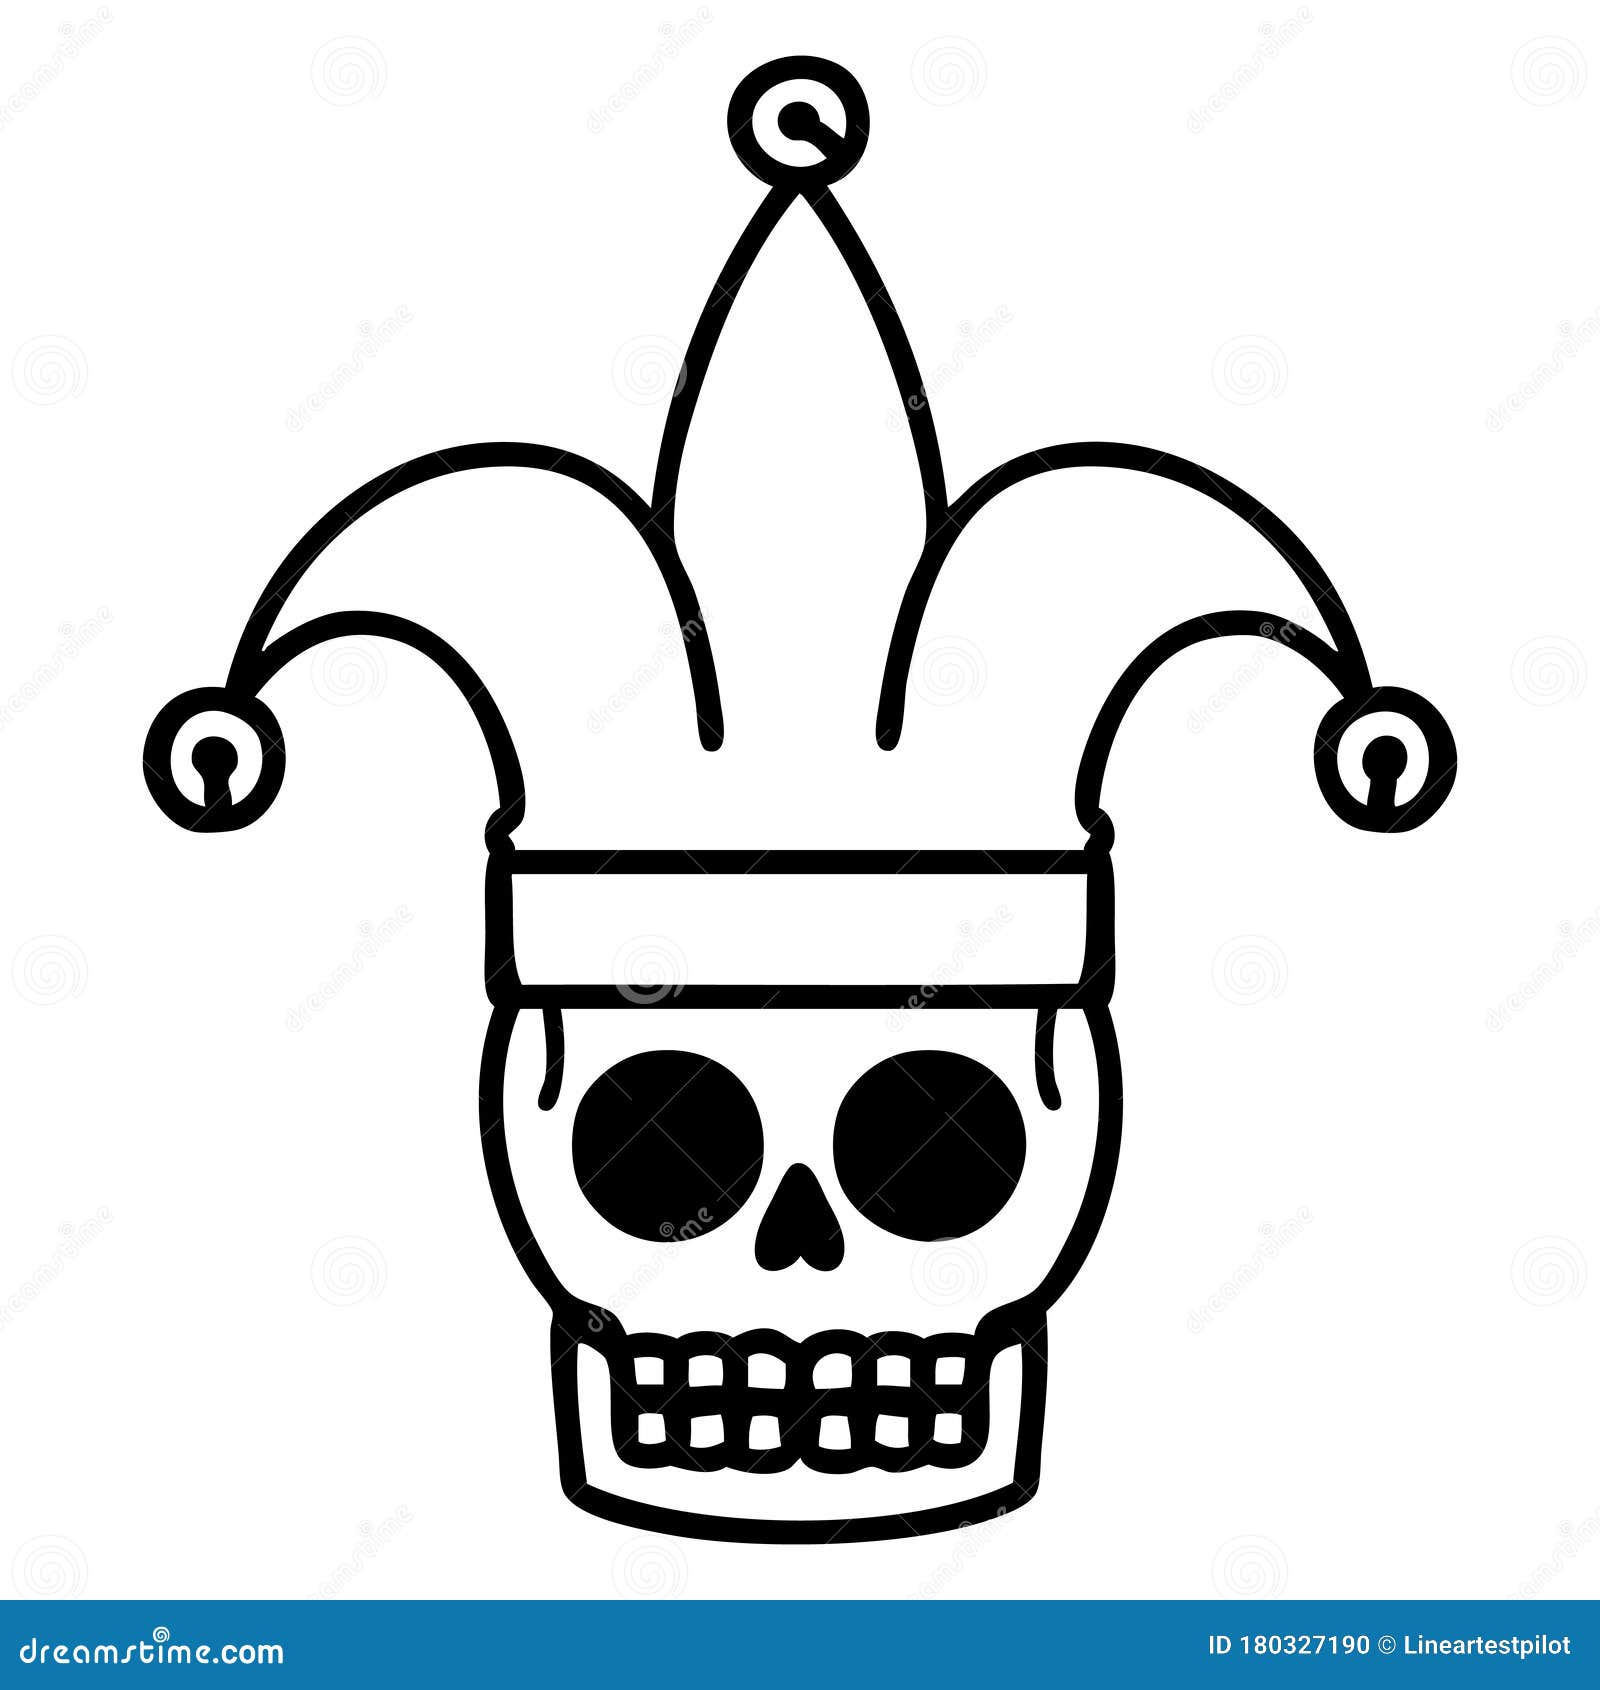 Jester skulls tattoo